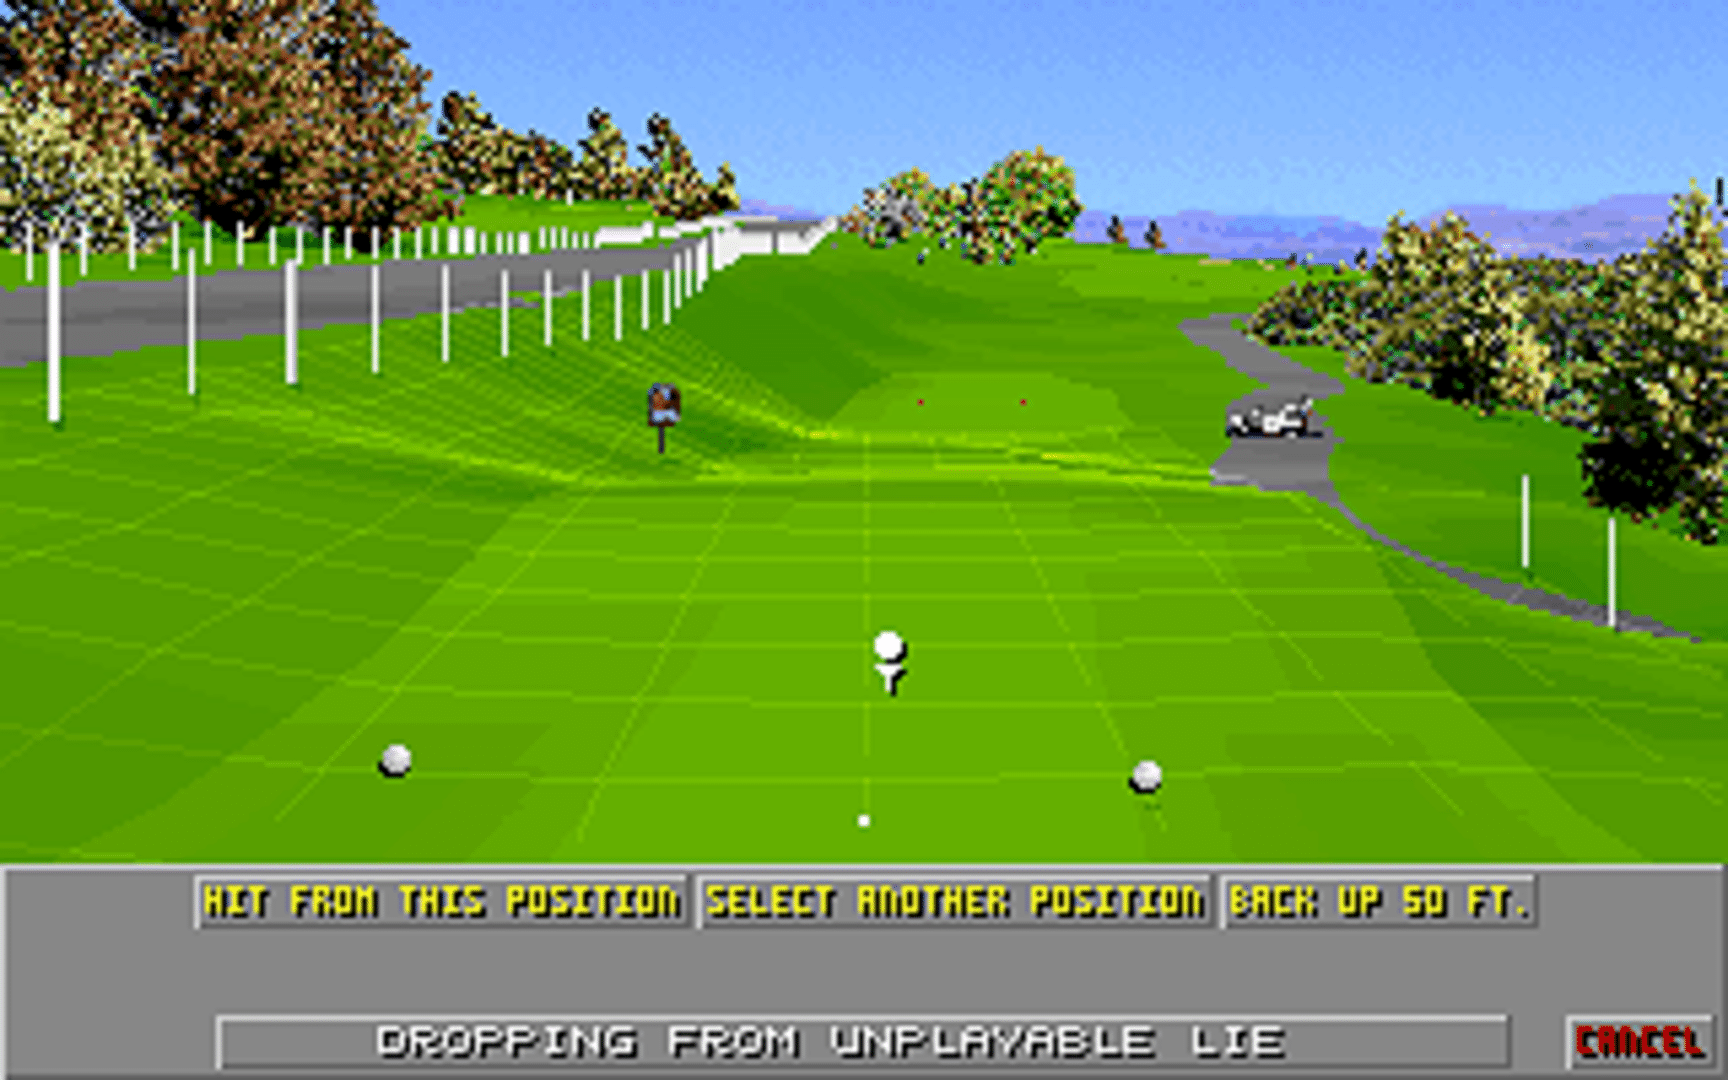 Links: Championship Course - Bountiful Golf Course screenshot